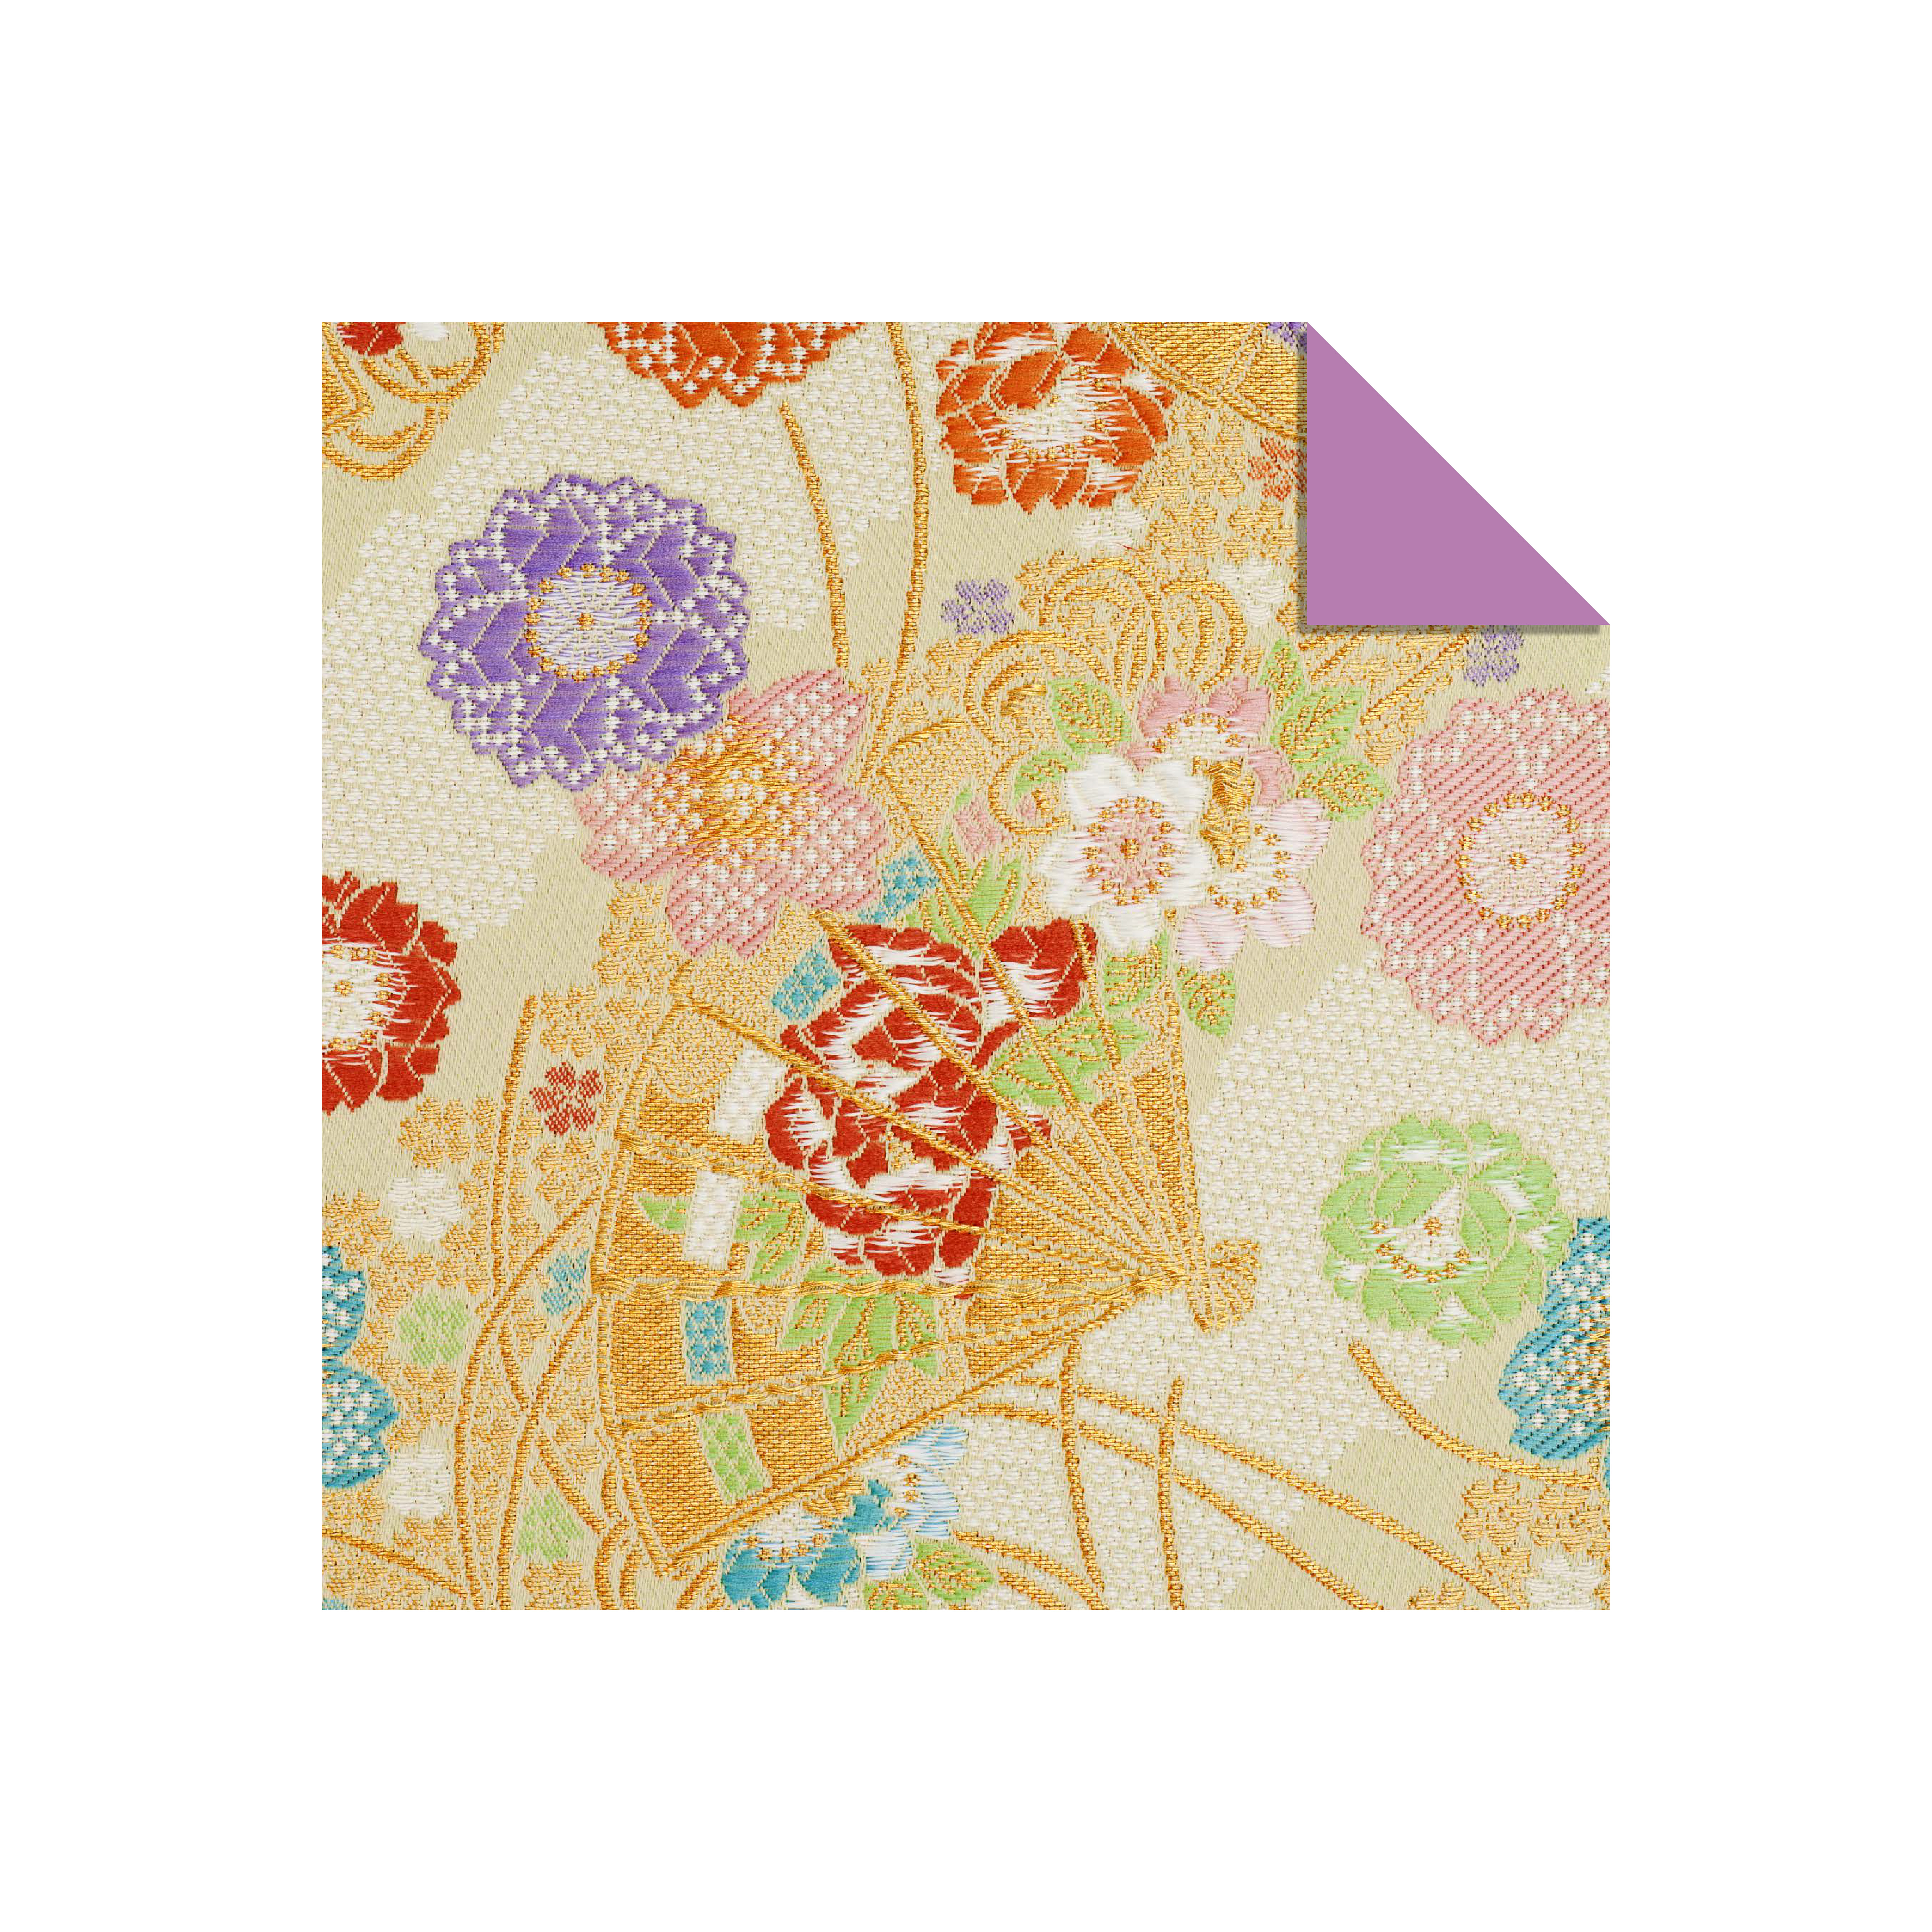 Origami Paper 500 sheets Kimono Flowers 6" (15 cm)